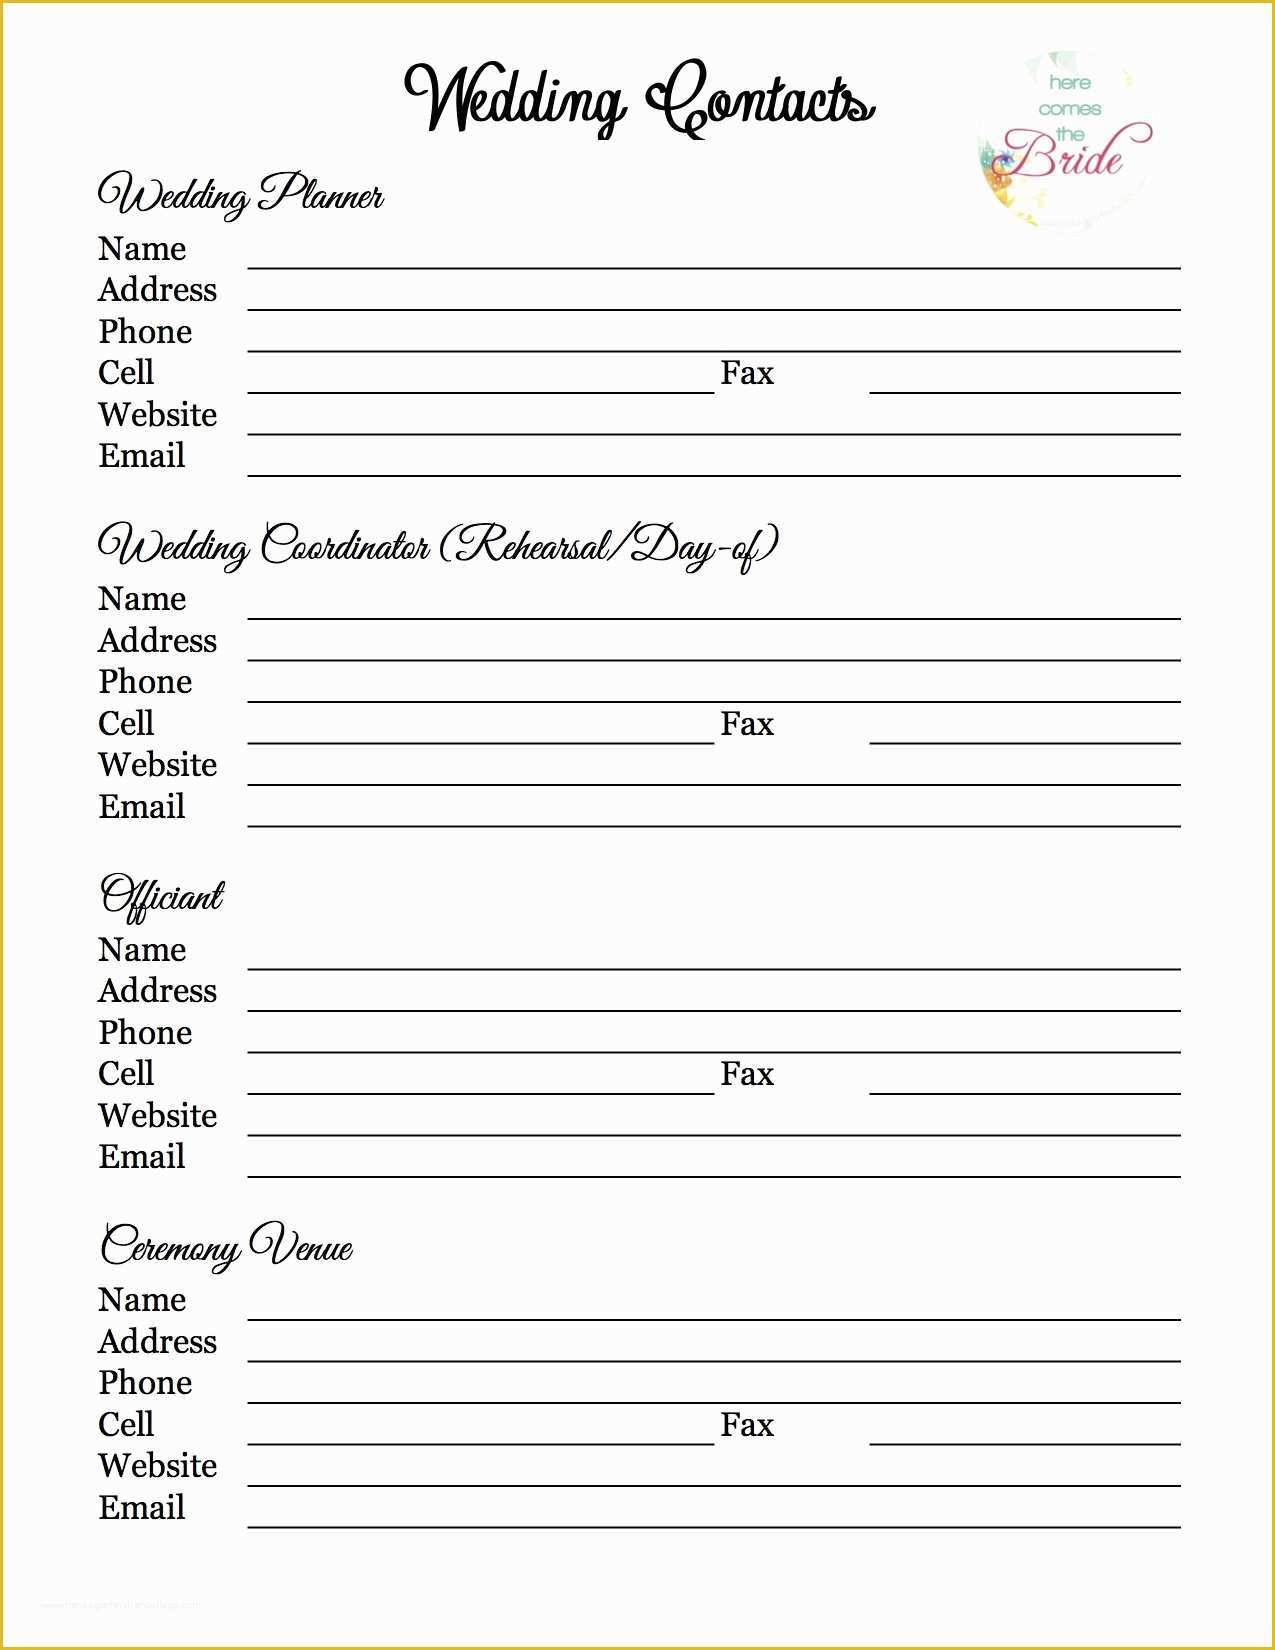 free-printable-wedding-planning-templates-of-wedding-planning-checklist